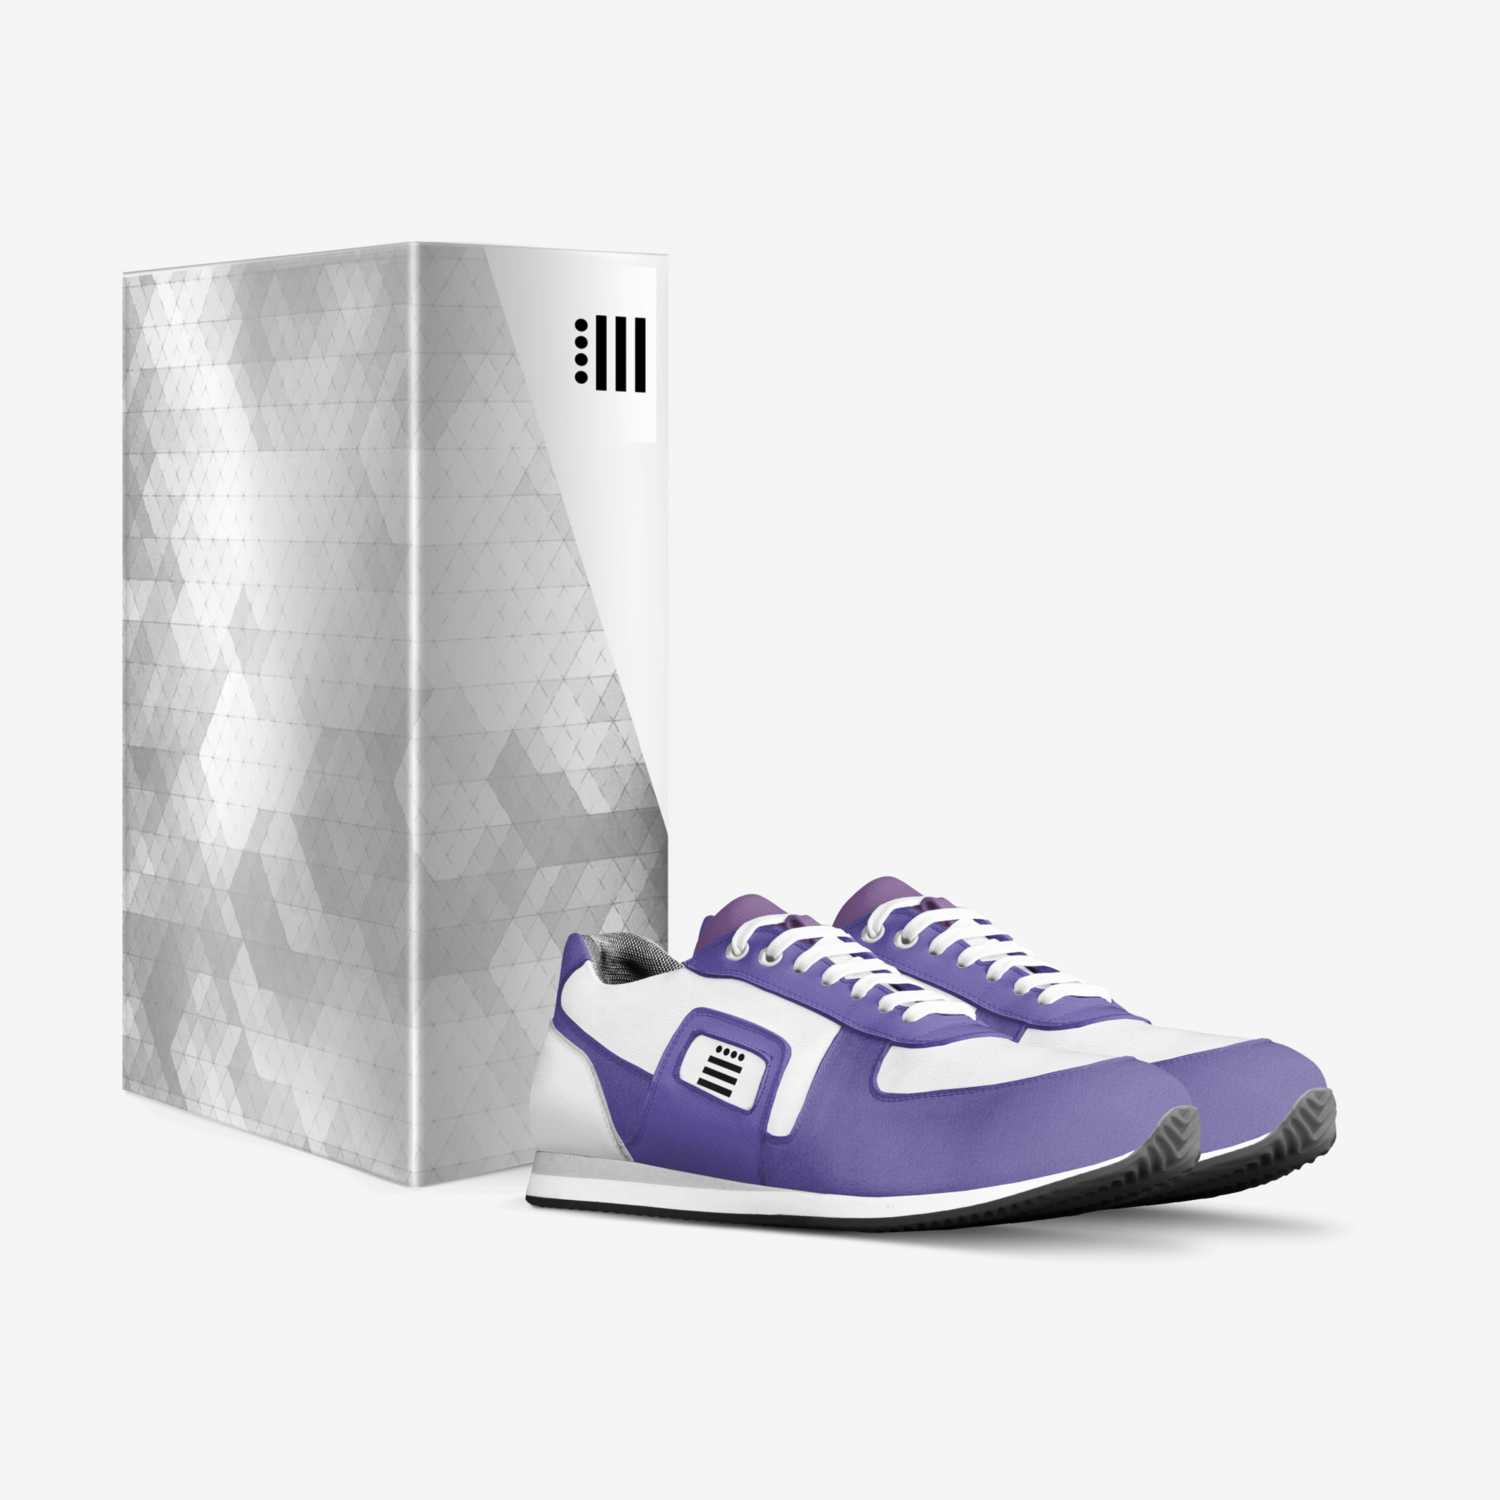 Shino Twenty Four custom made in Italy shoes by Shino® Shino Twenty Four™ | Box view